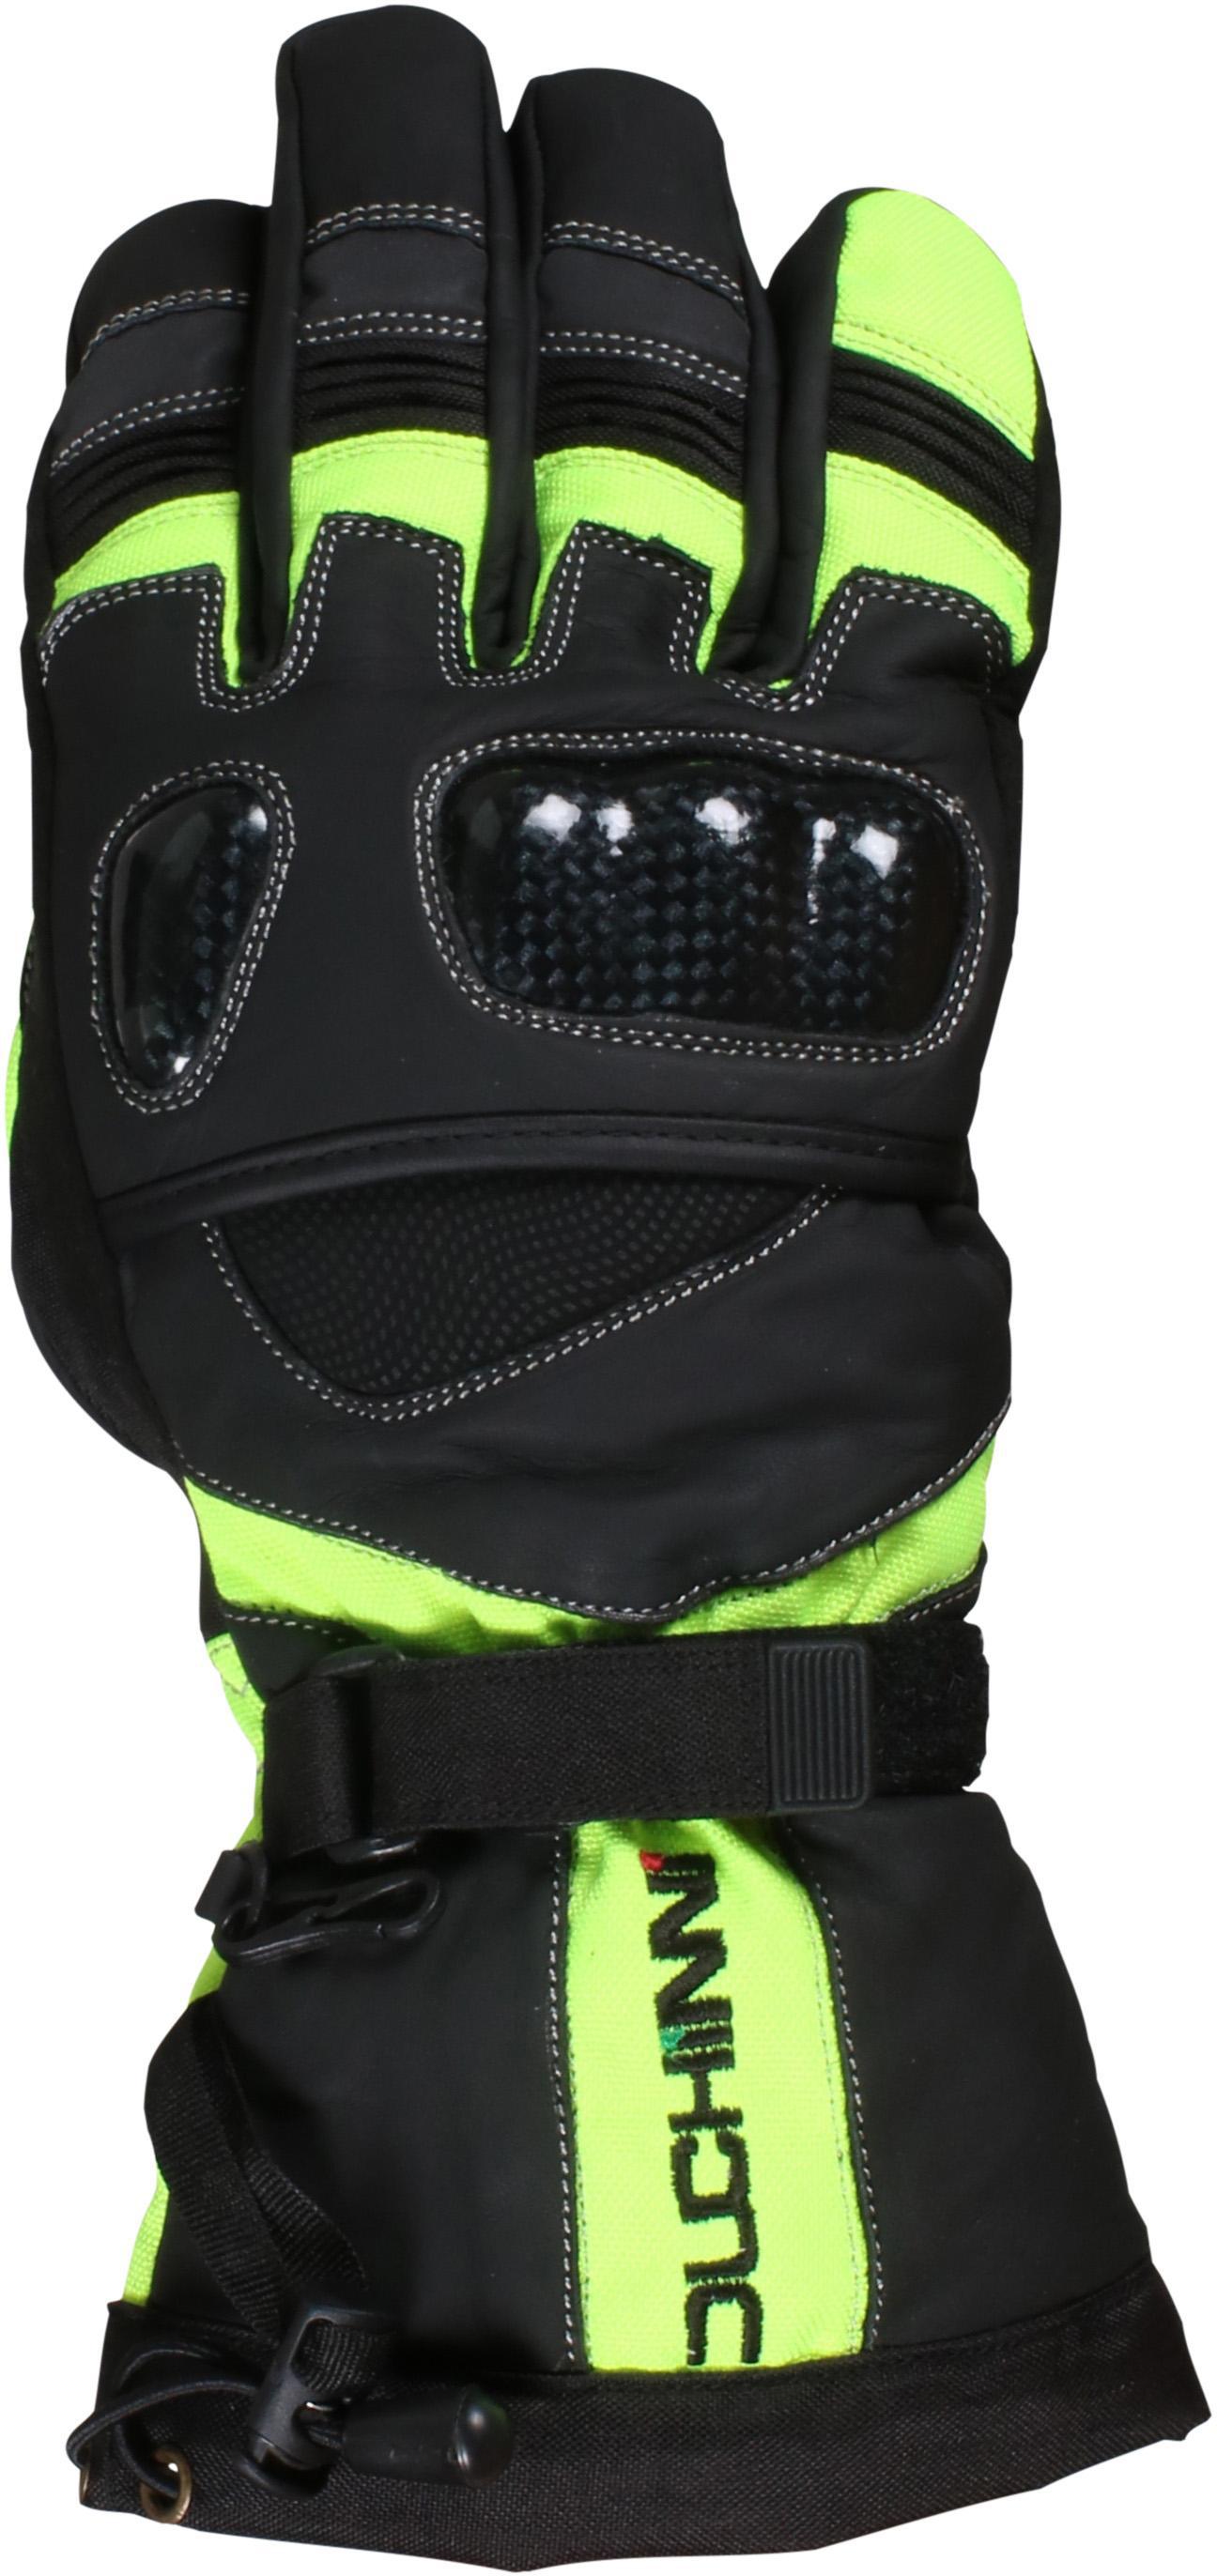 Duchinni Yukon Motorcycle Gloves - Black And Neon, 2Xl